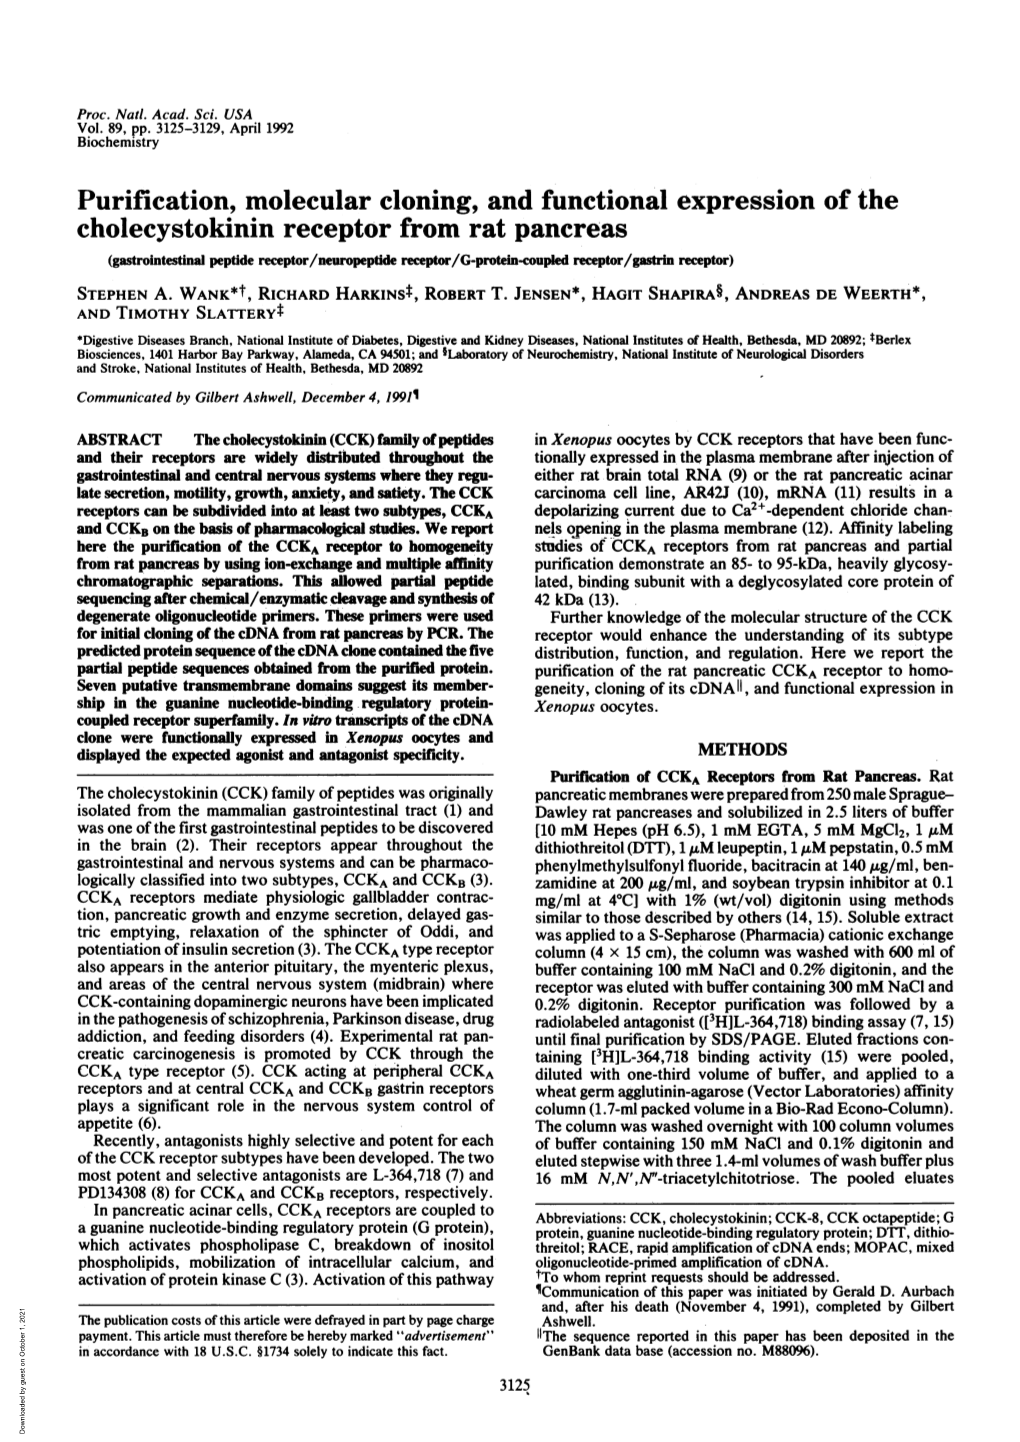 Cholecystokinin Receptor from Rat Pancreas (Gastrointestinal Peptide Receptor/Neuropeptide Receptor/G-Protein-Coupled Receptor/Gastrin Receptor) STEPHEN A